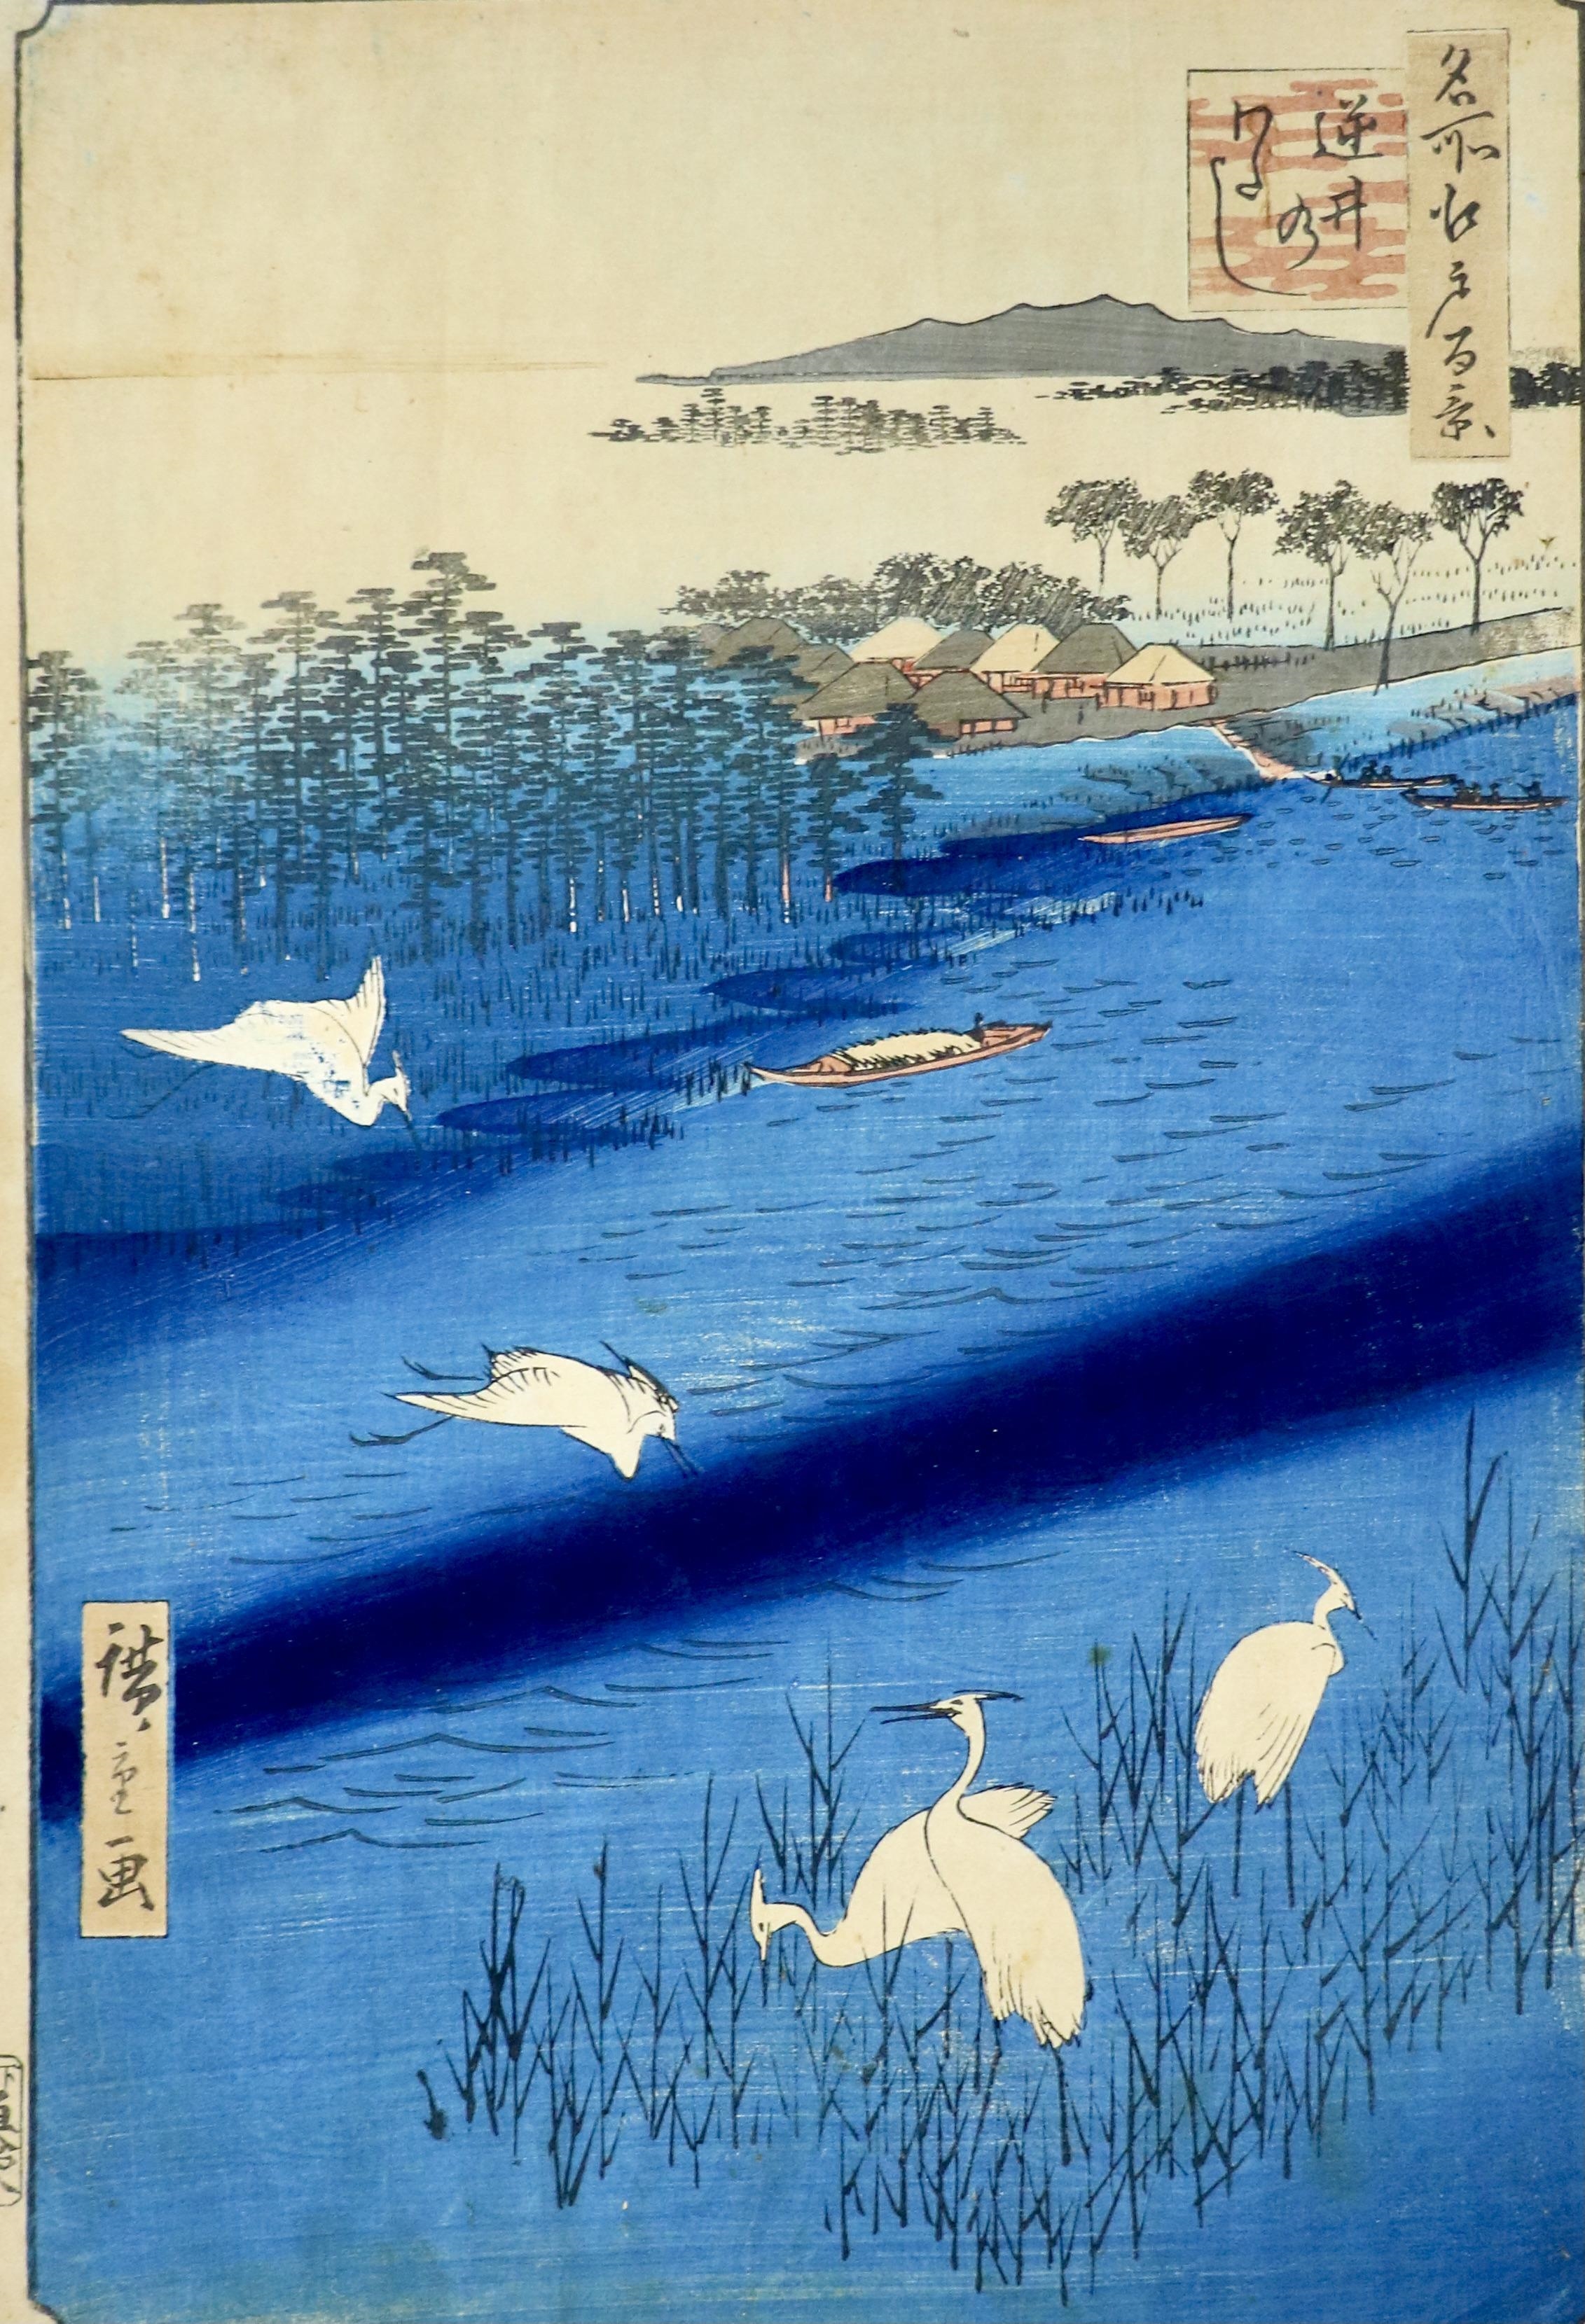 [JAPANESE PRINTS] – HIROSHIGE, Utagawa (1797-1858). “Sakasai no watashi” (The Ferry Crossing at Sakasai). by Utagawa Hiroshige